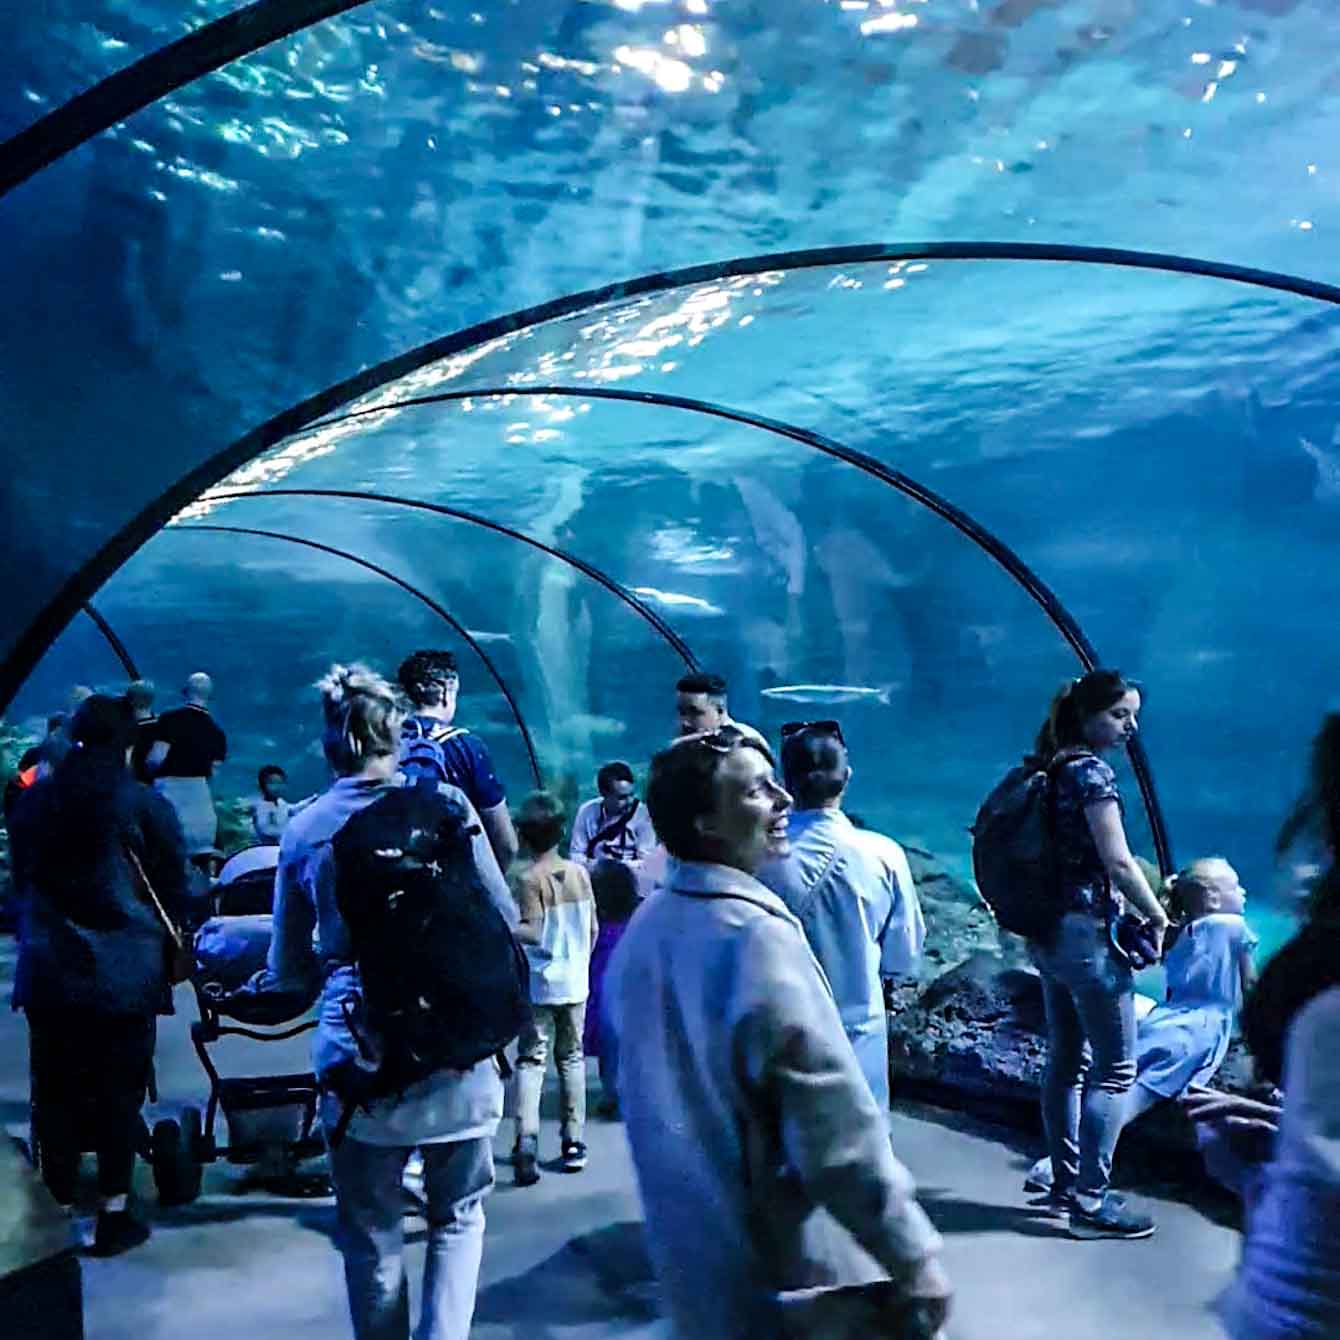 Blijdorp Zoo - Walking through aquarium - Discover True Netherlands